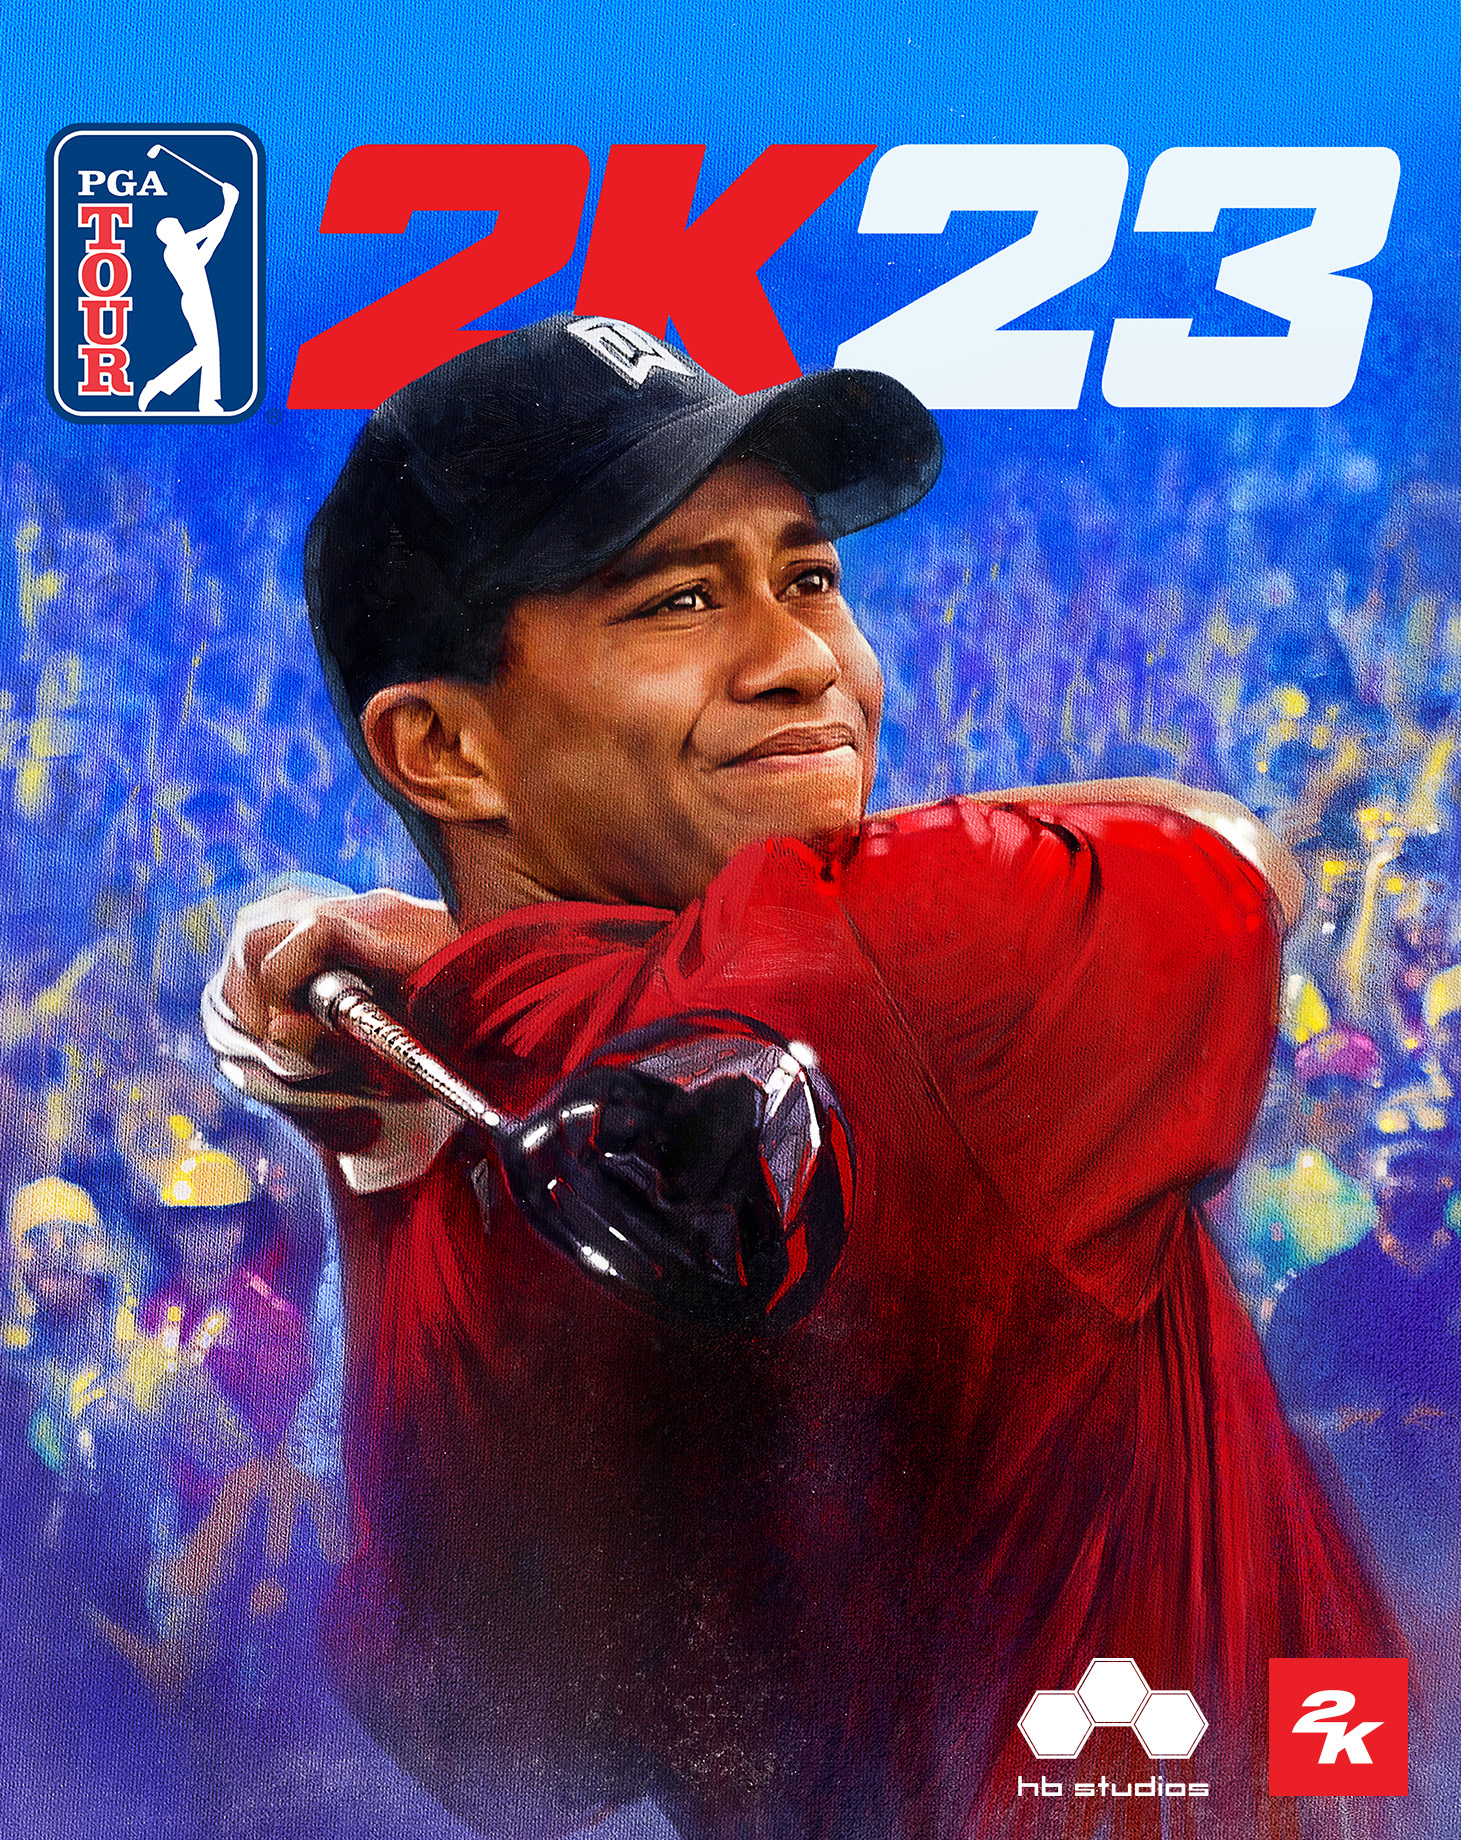 PGA TOUR 2K23 coming October 11, bringing back Tiger Woods as cover star